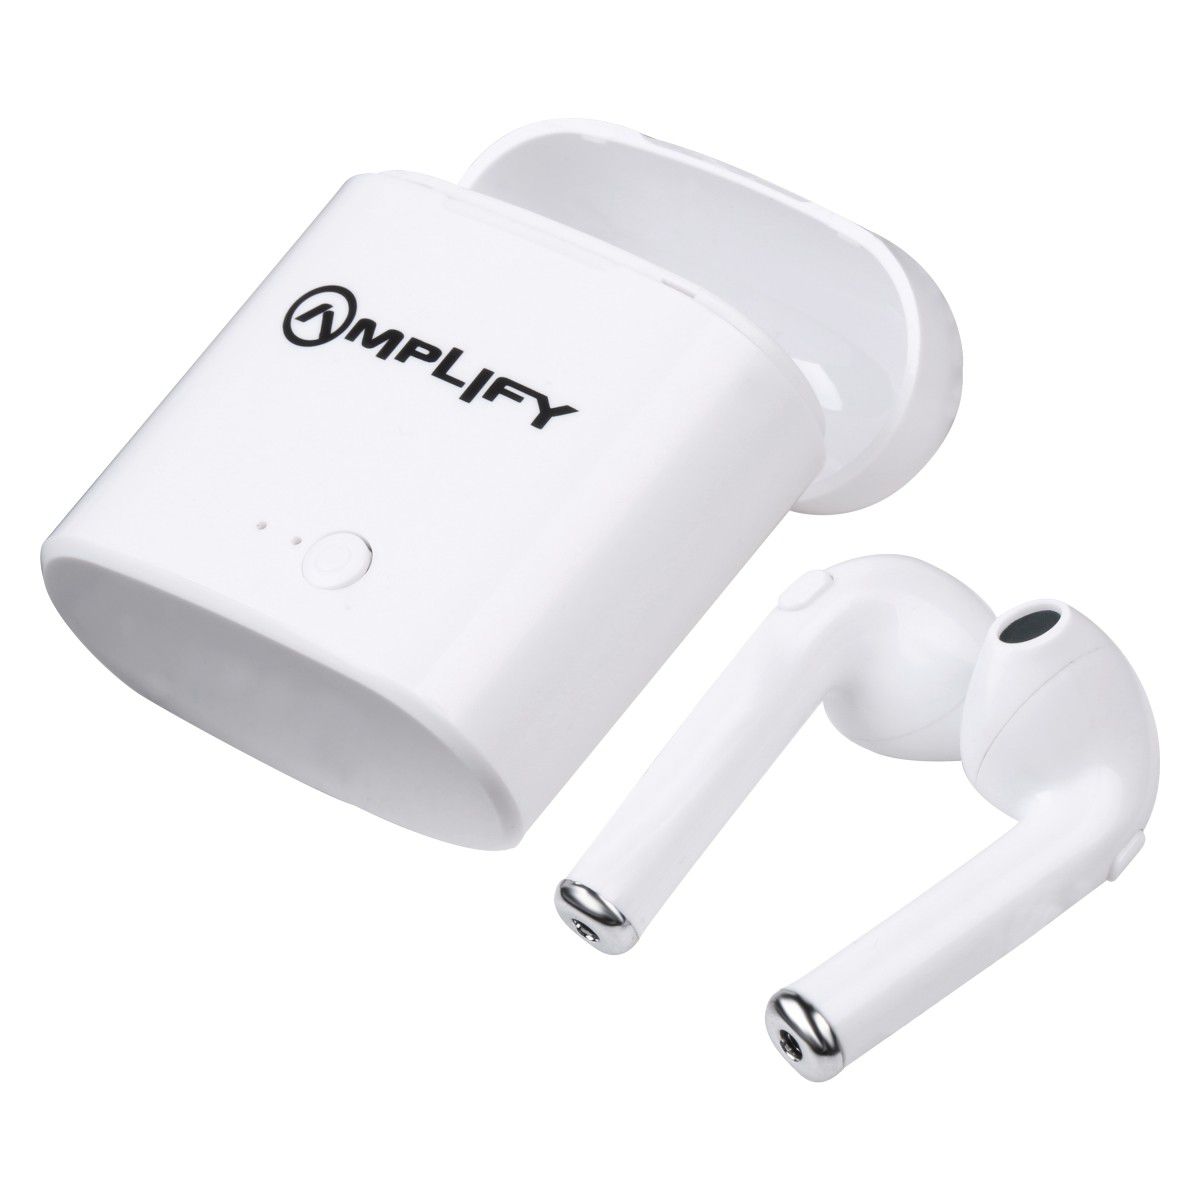 Amplify Note Series TWS Bluetooth Earphones - White